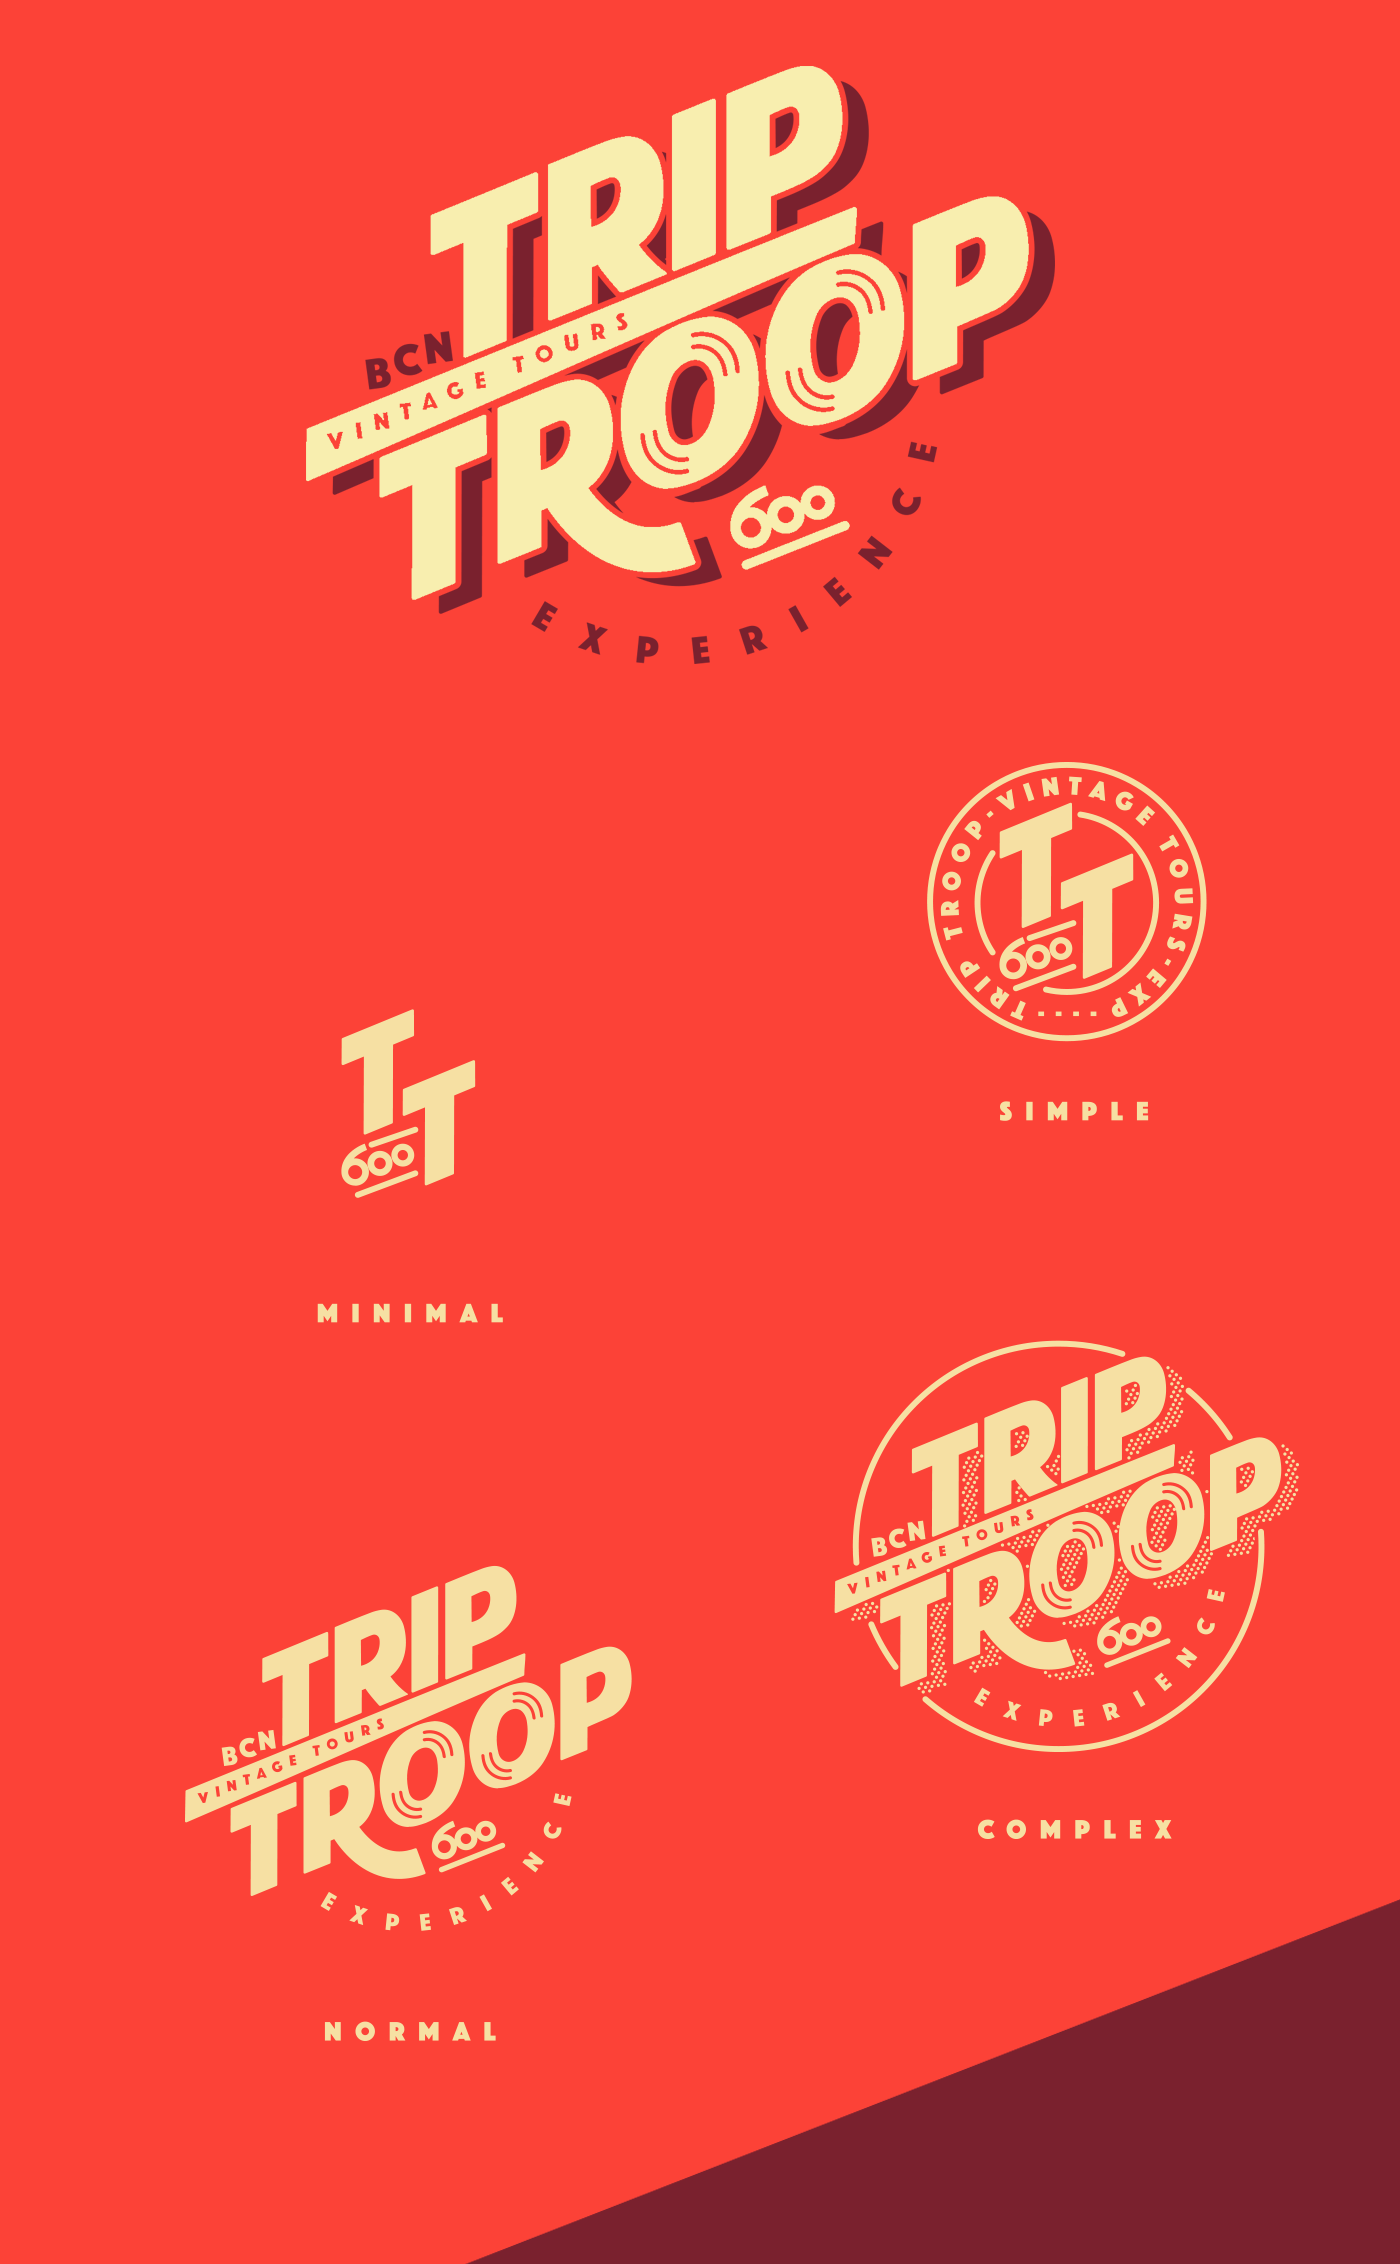 trip troop car lettering logo Webdesign Web seat seat 600 vintage tour barcelona Travel tourist car